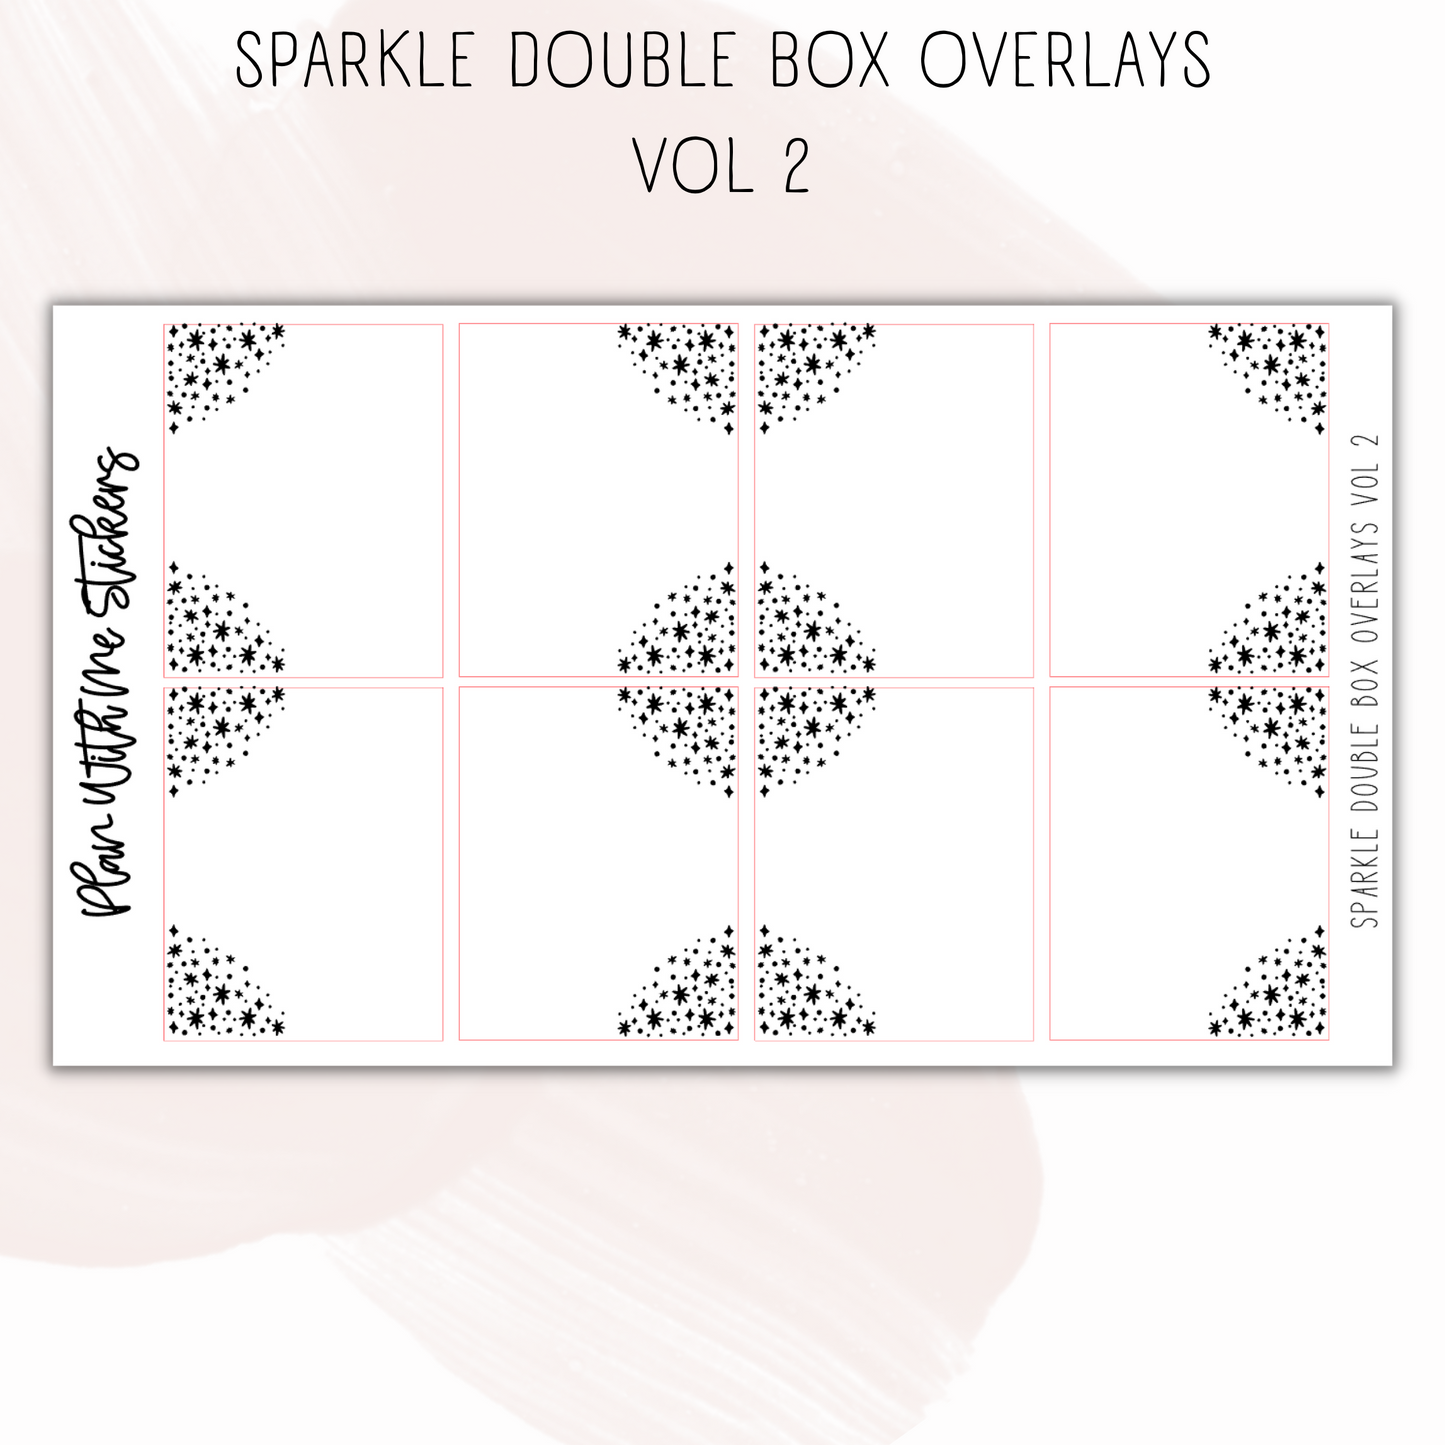 Sparkle Double Box Overlays Vol 2